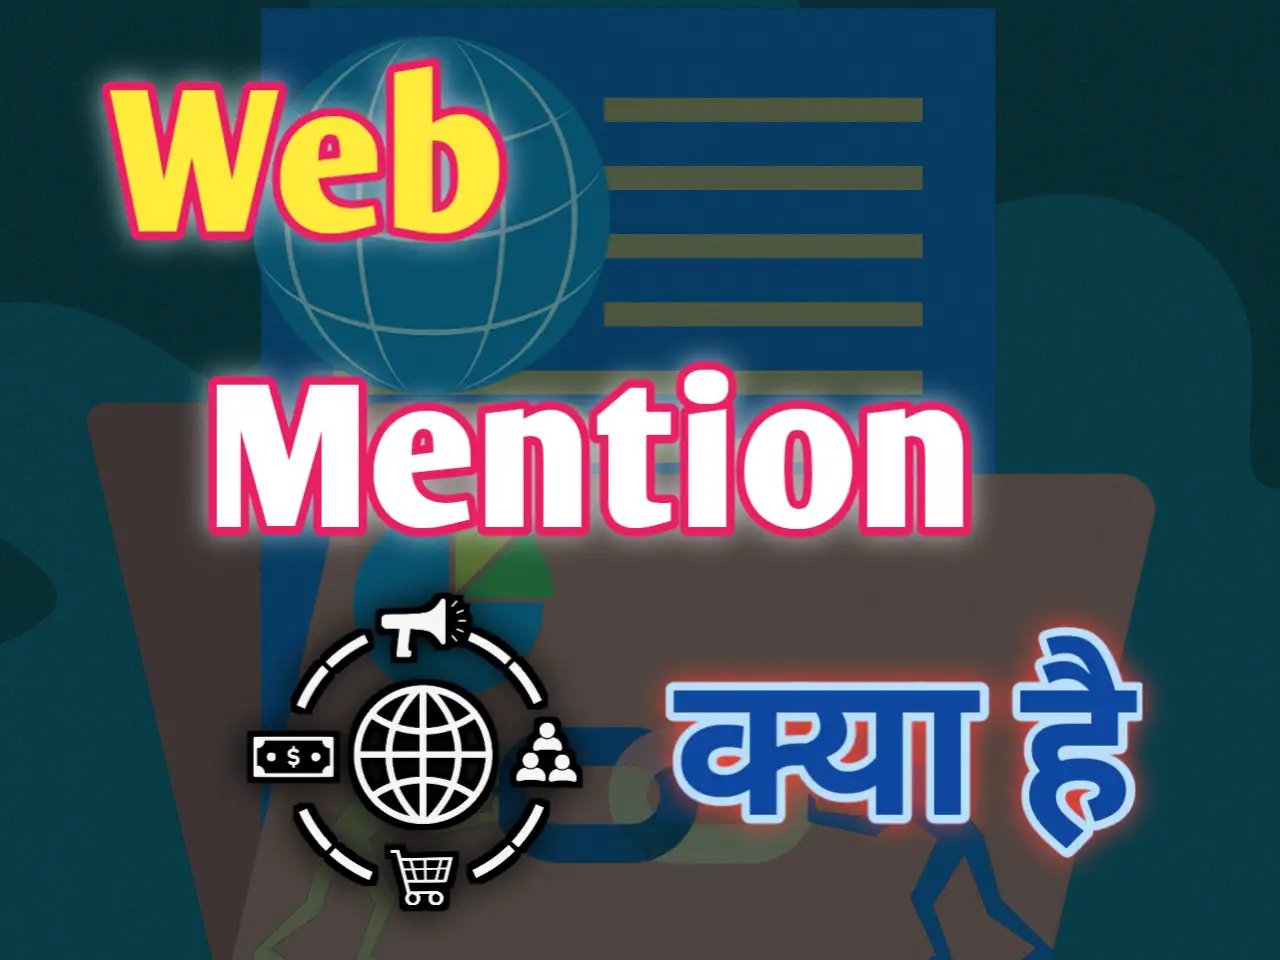 Web mention